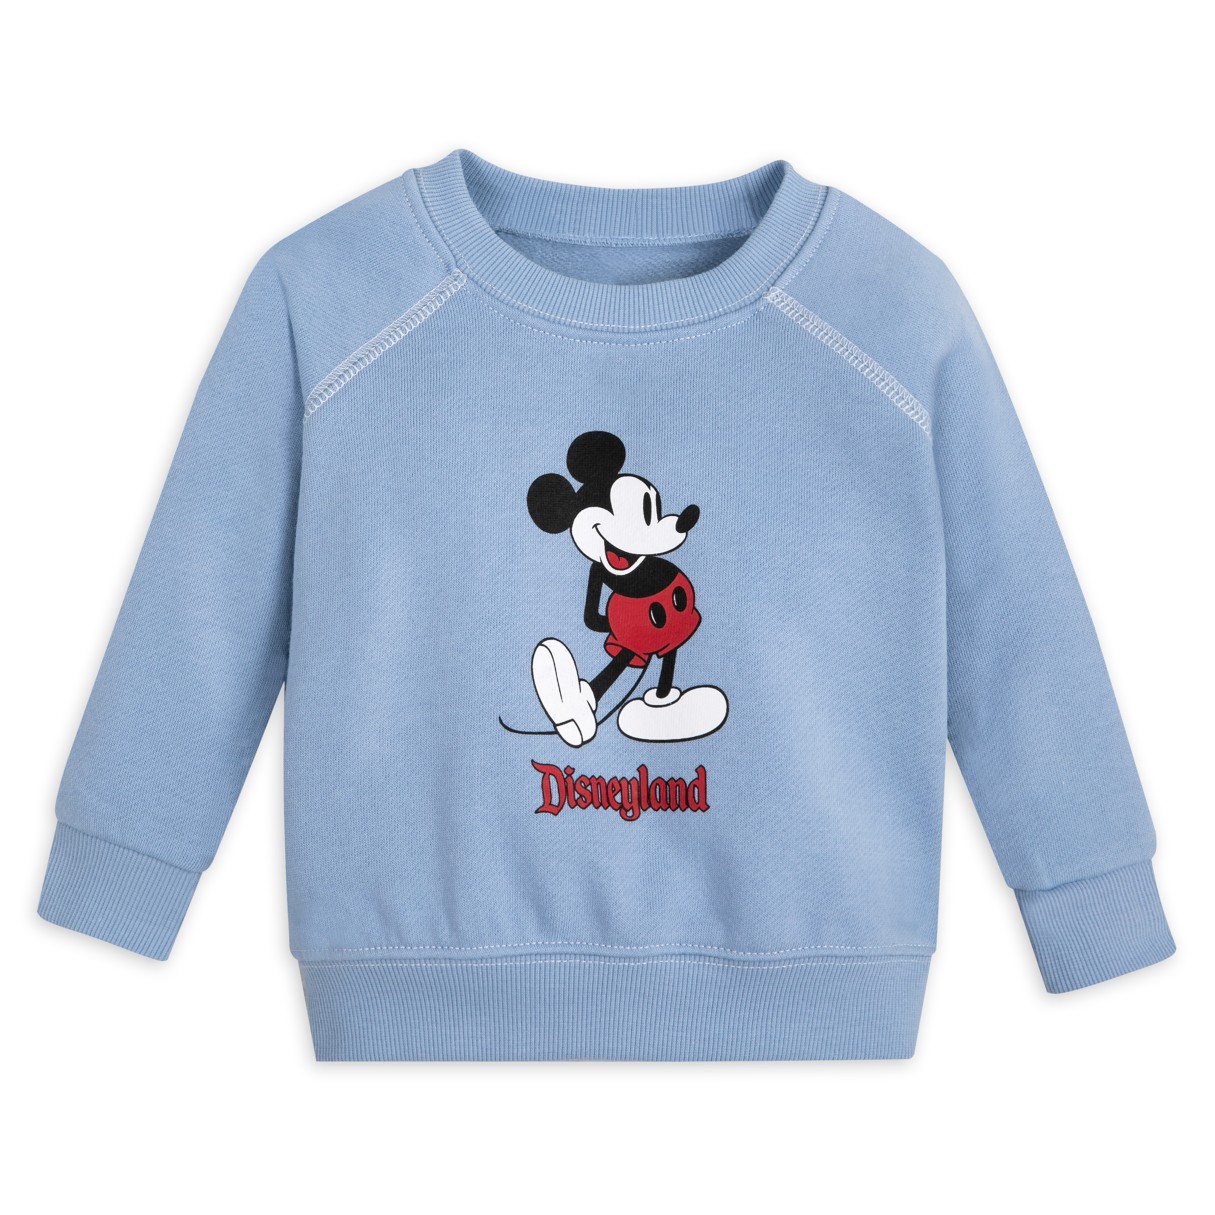 Mickey Mouse Classic Sweatshirt for Baby – Disneyland – Blue